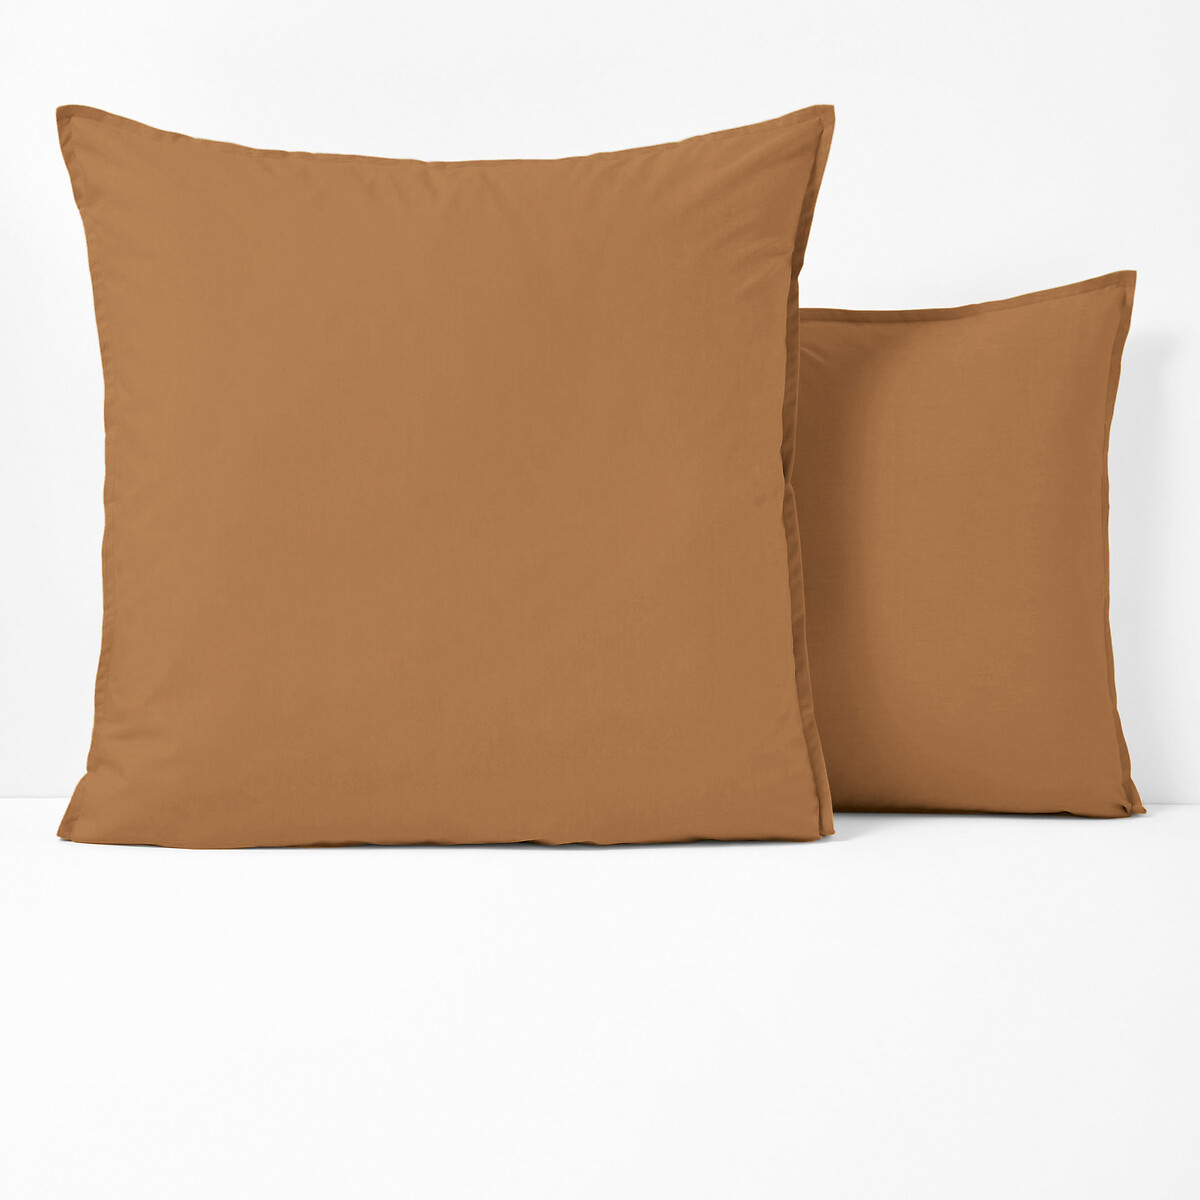 Pillowcase in Plain Organic Cotton Percale